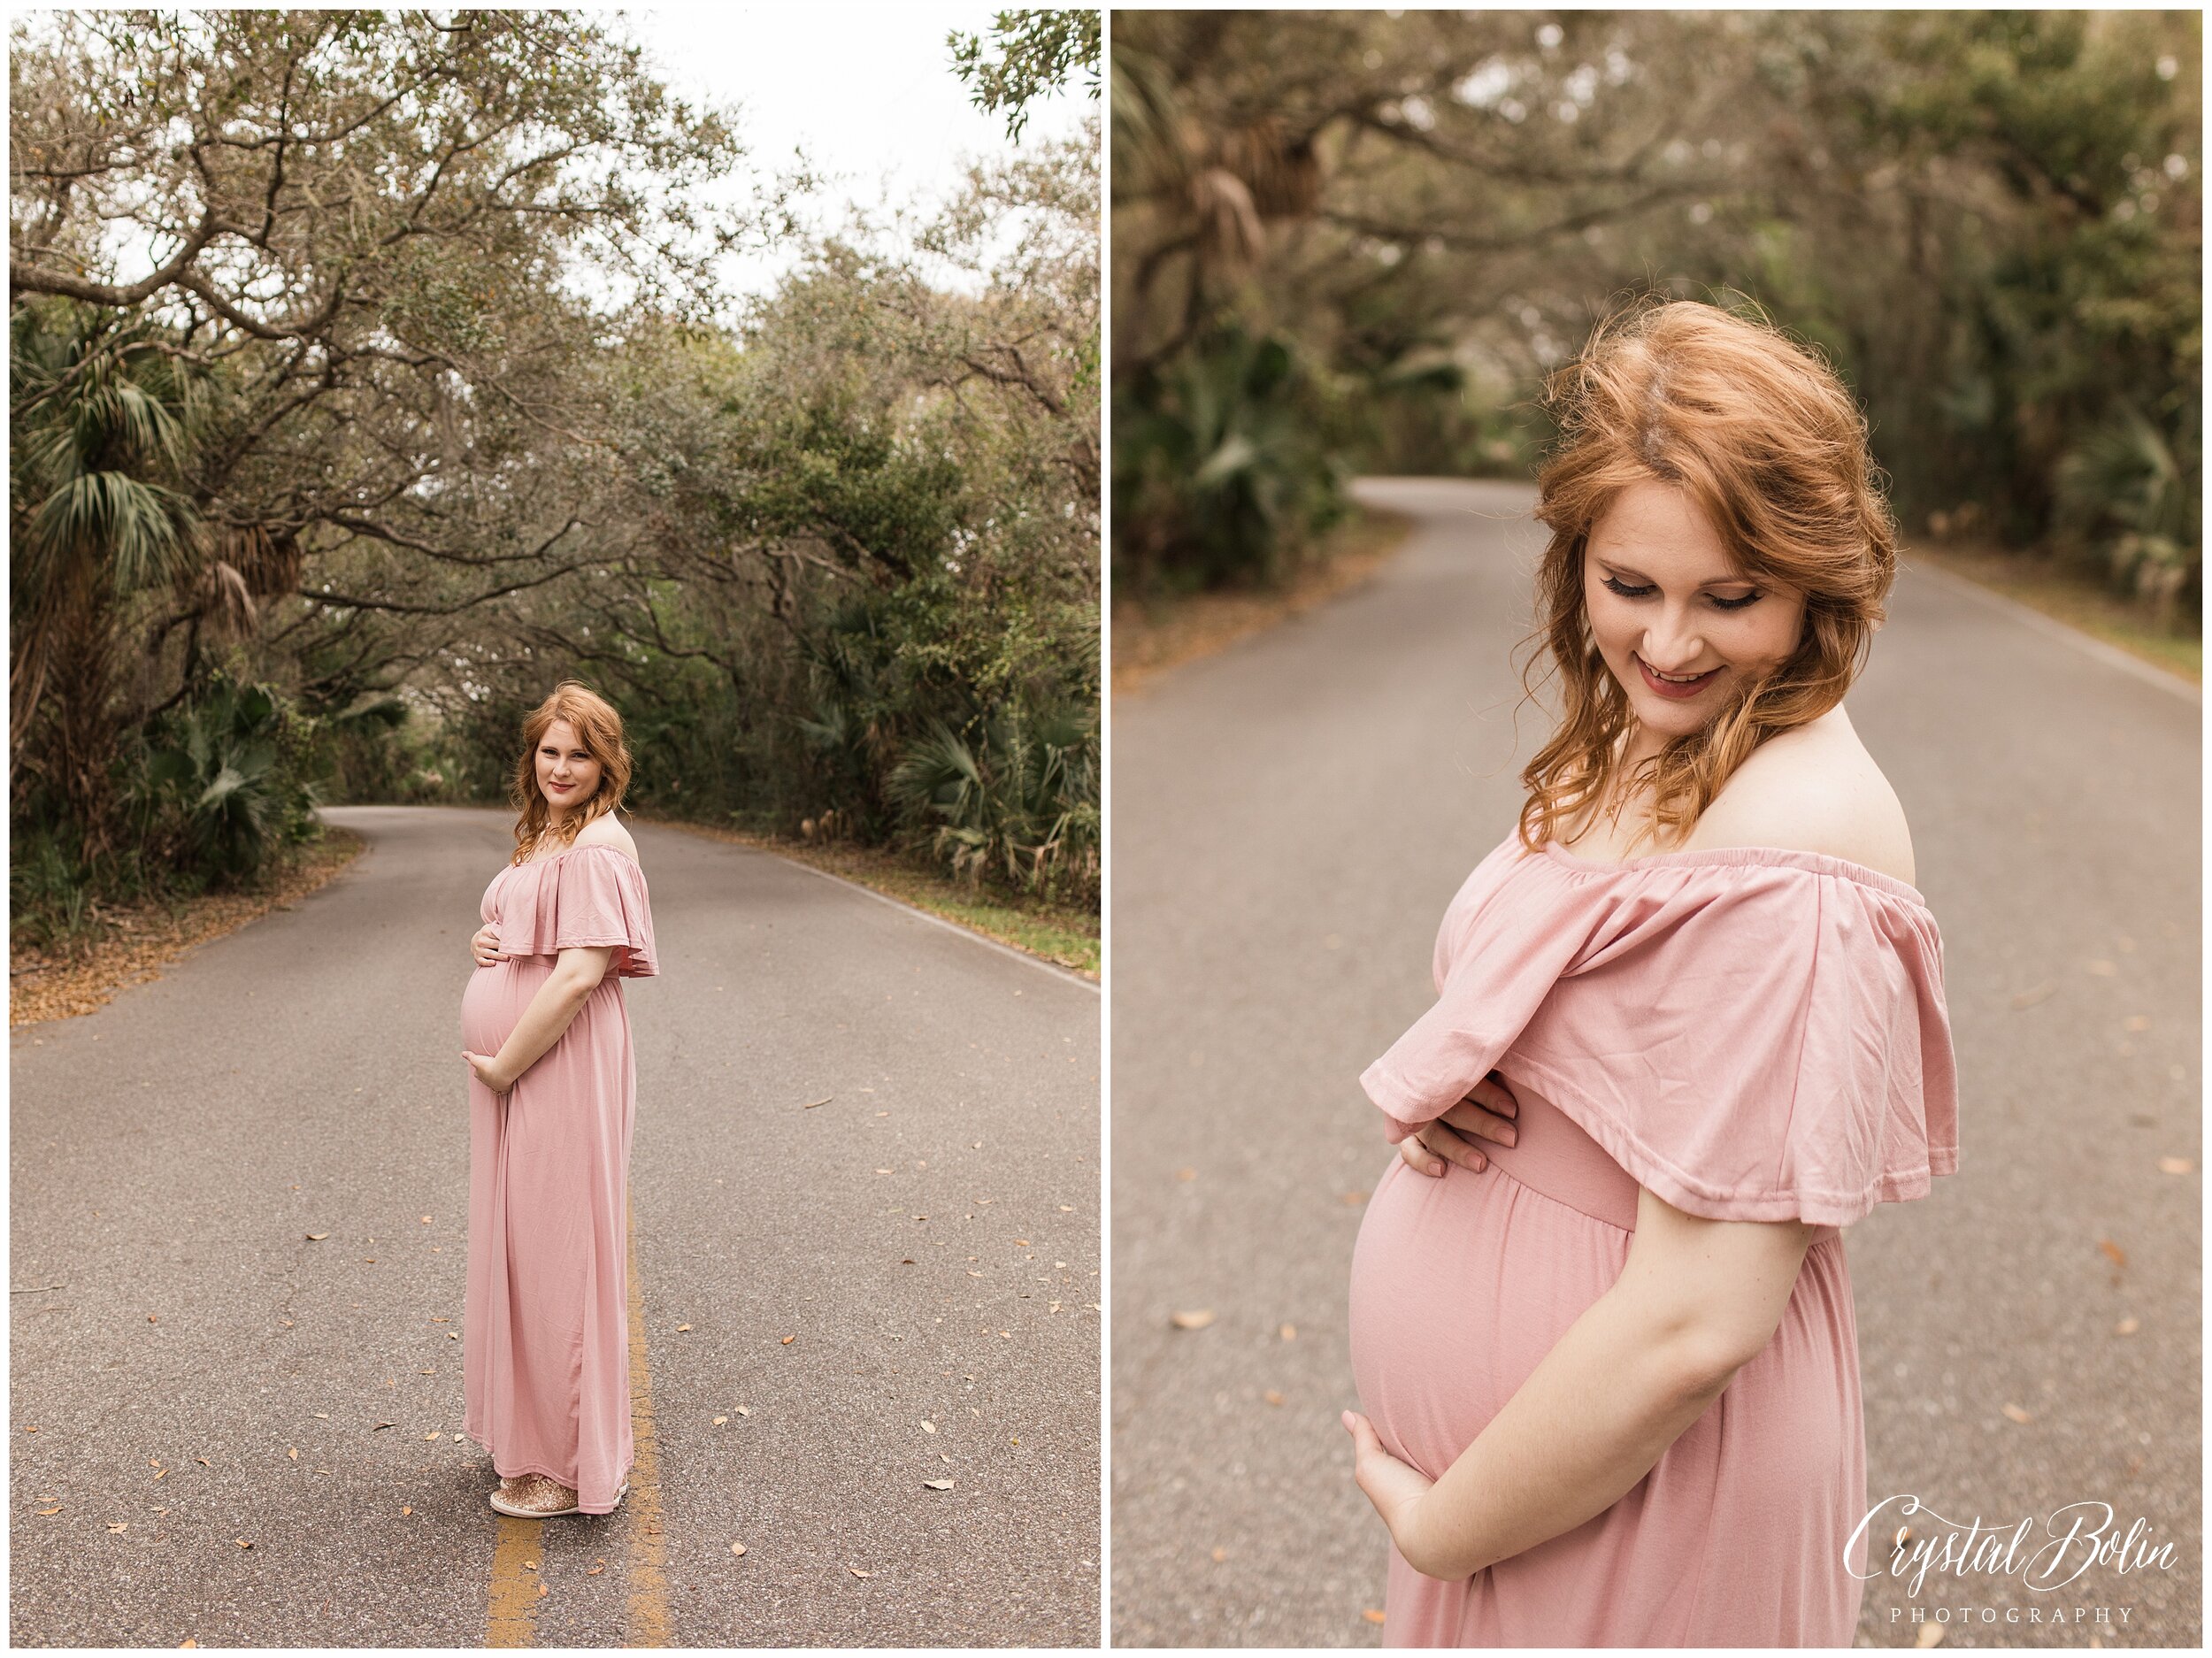 Amber & Curtis Maternity Photos